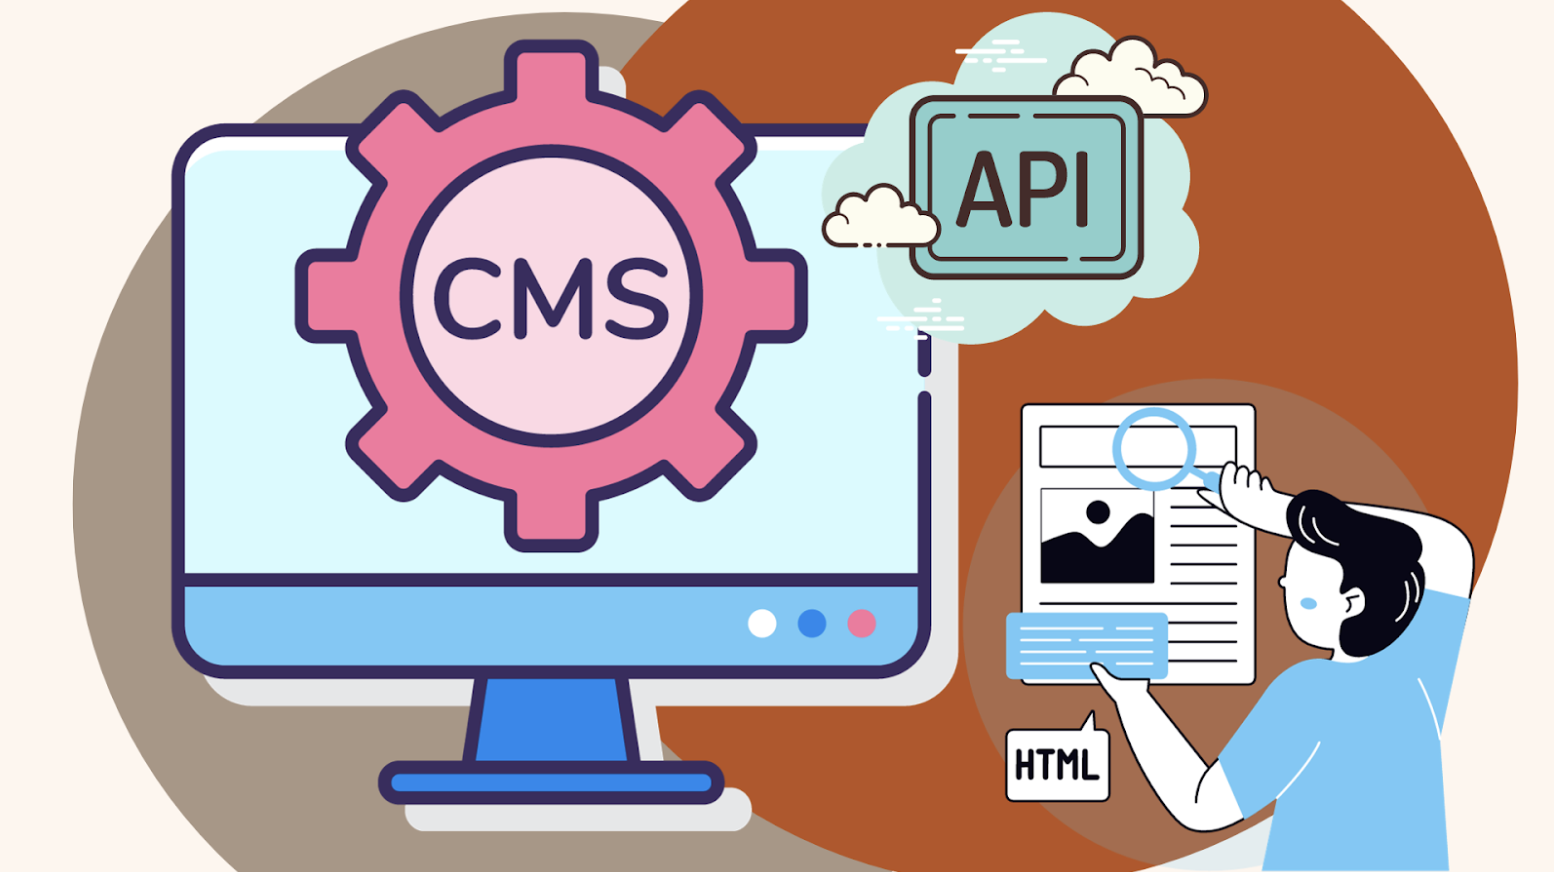 Best practices for image hosting in CMS platforms